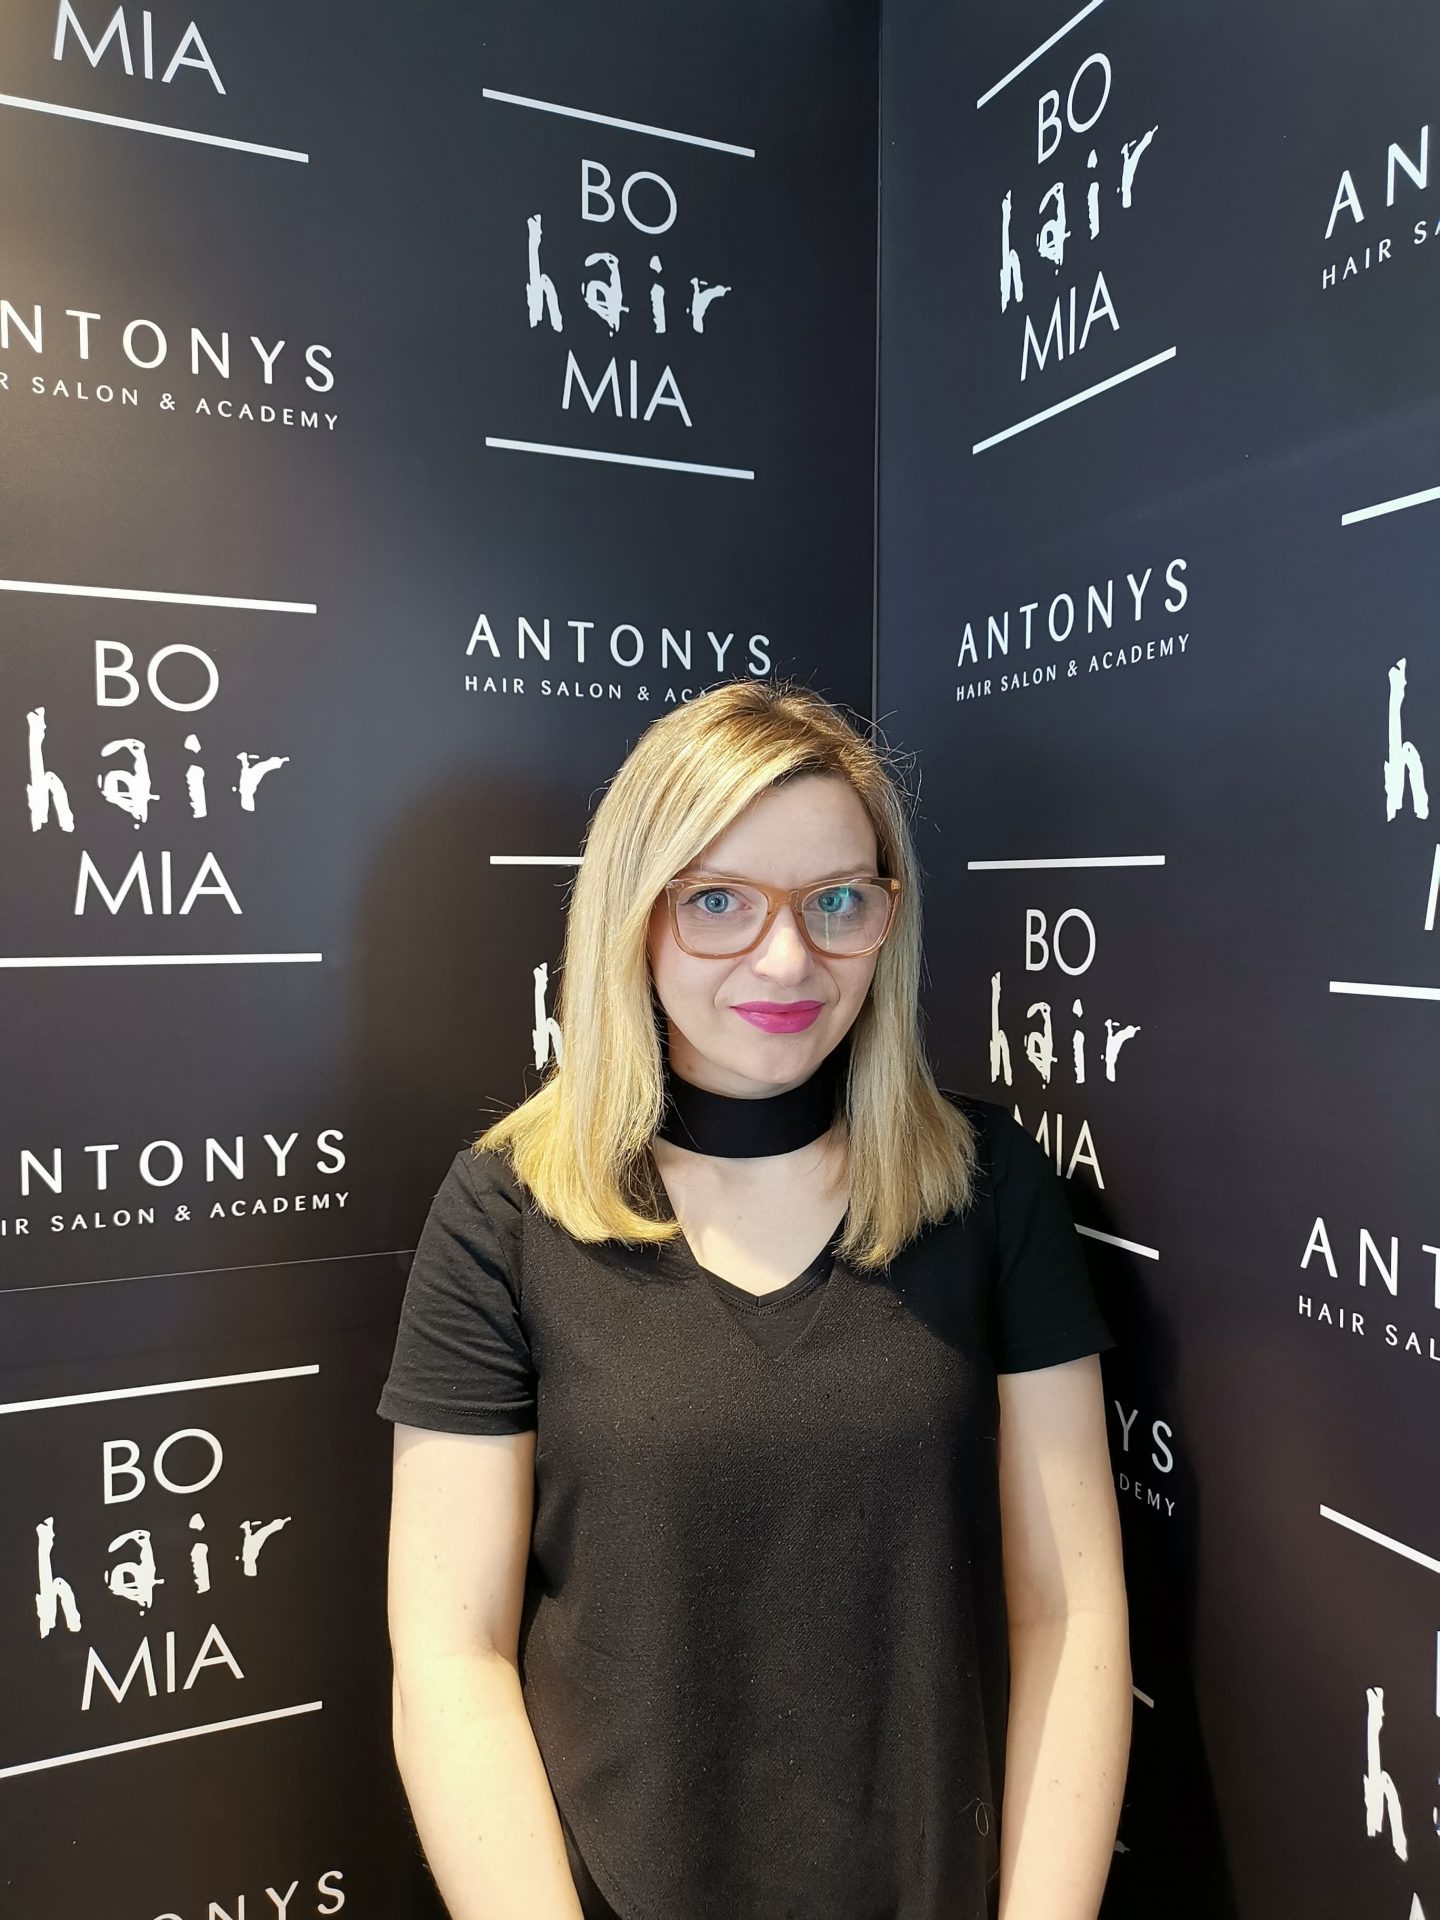 the best hair cuts & styles at antony's hair salon in bury